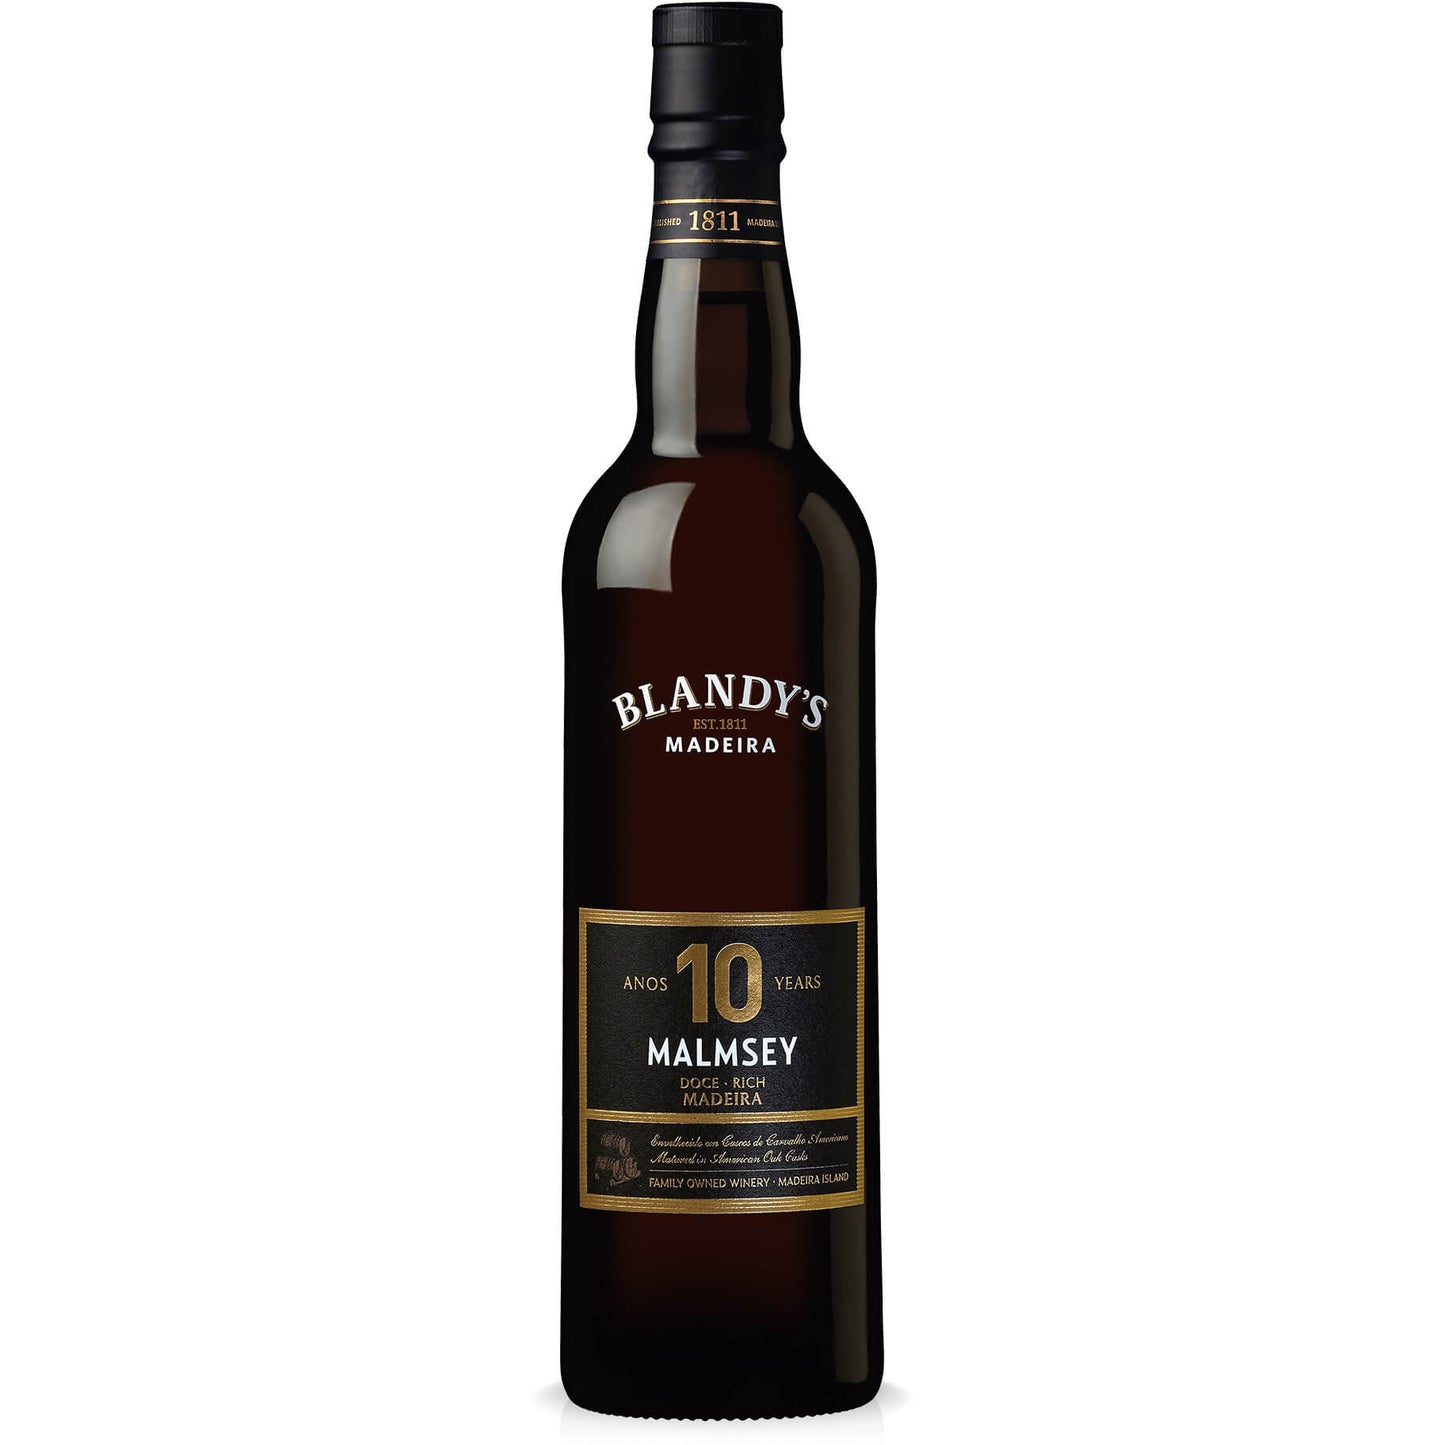 Blandy's Madeira 10 Years Malmsey Rich